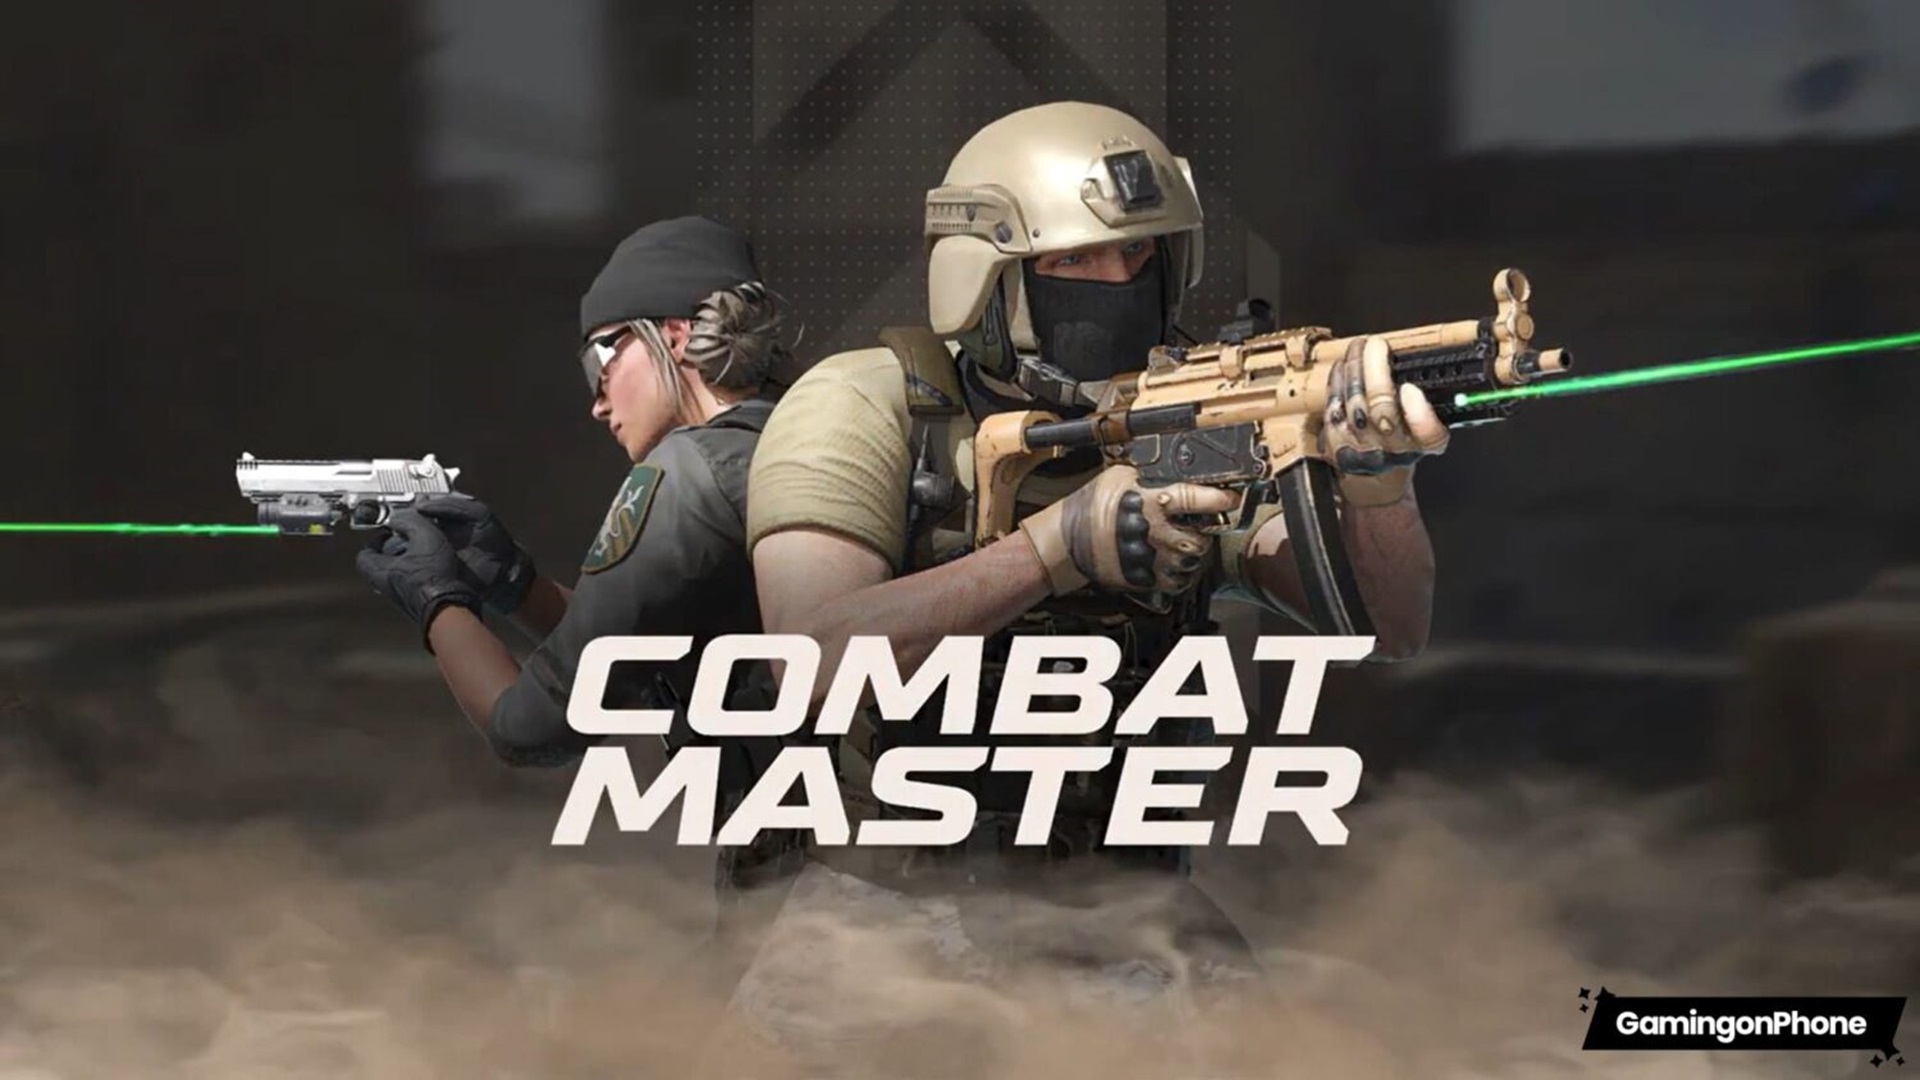 Combat master play market